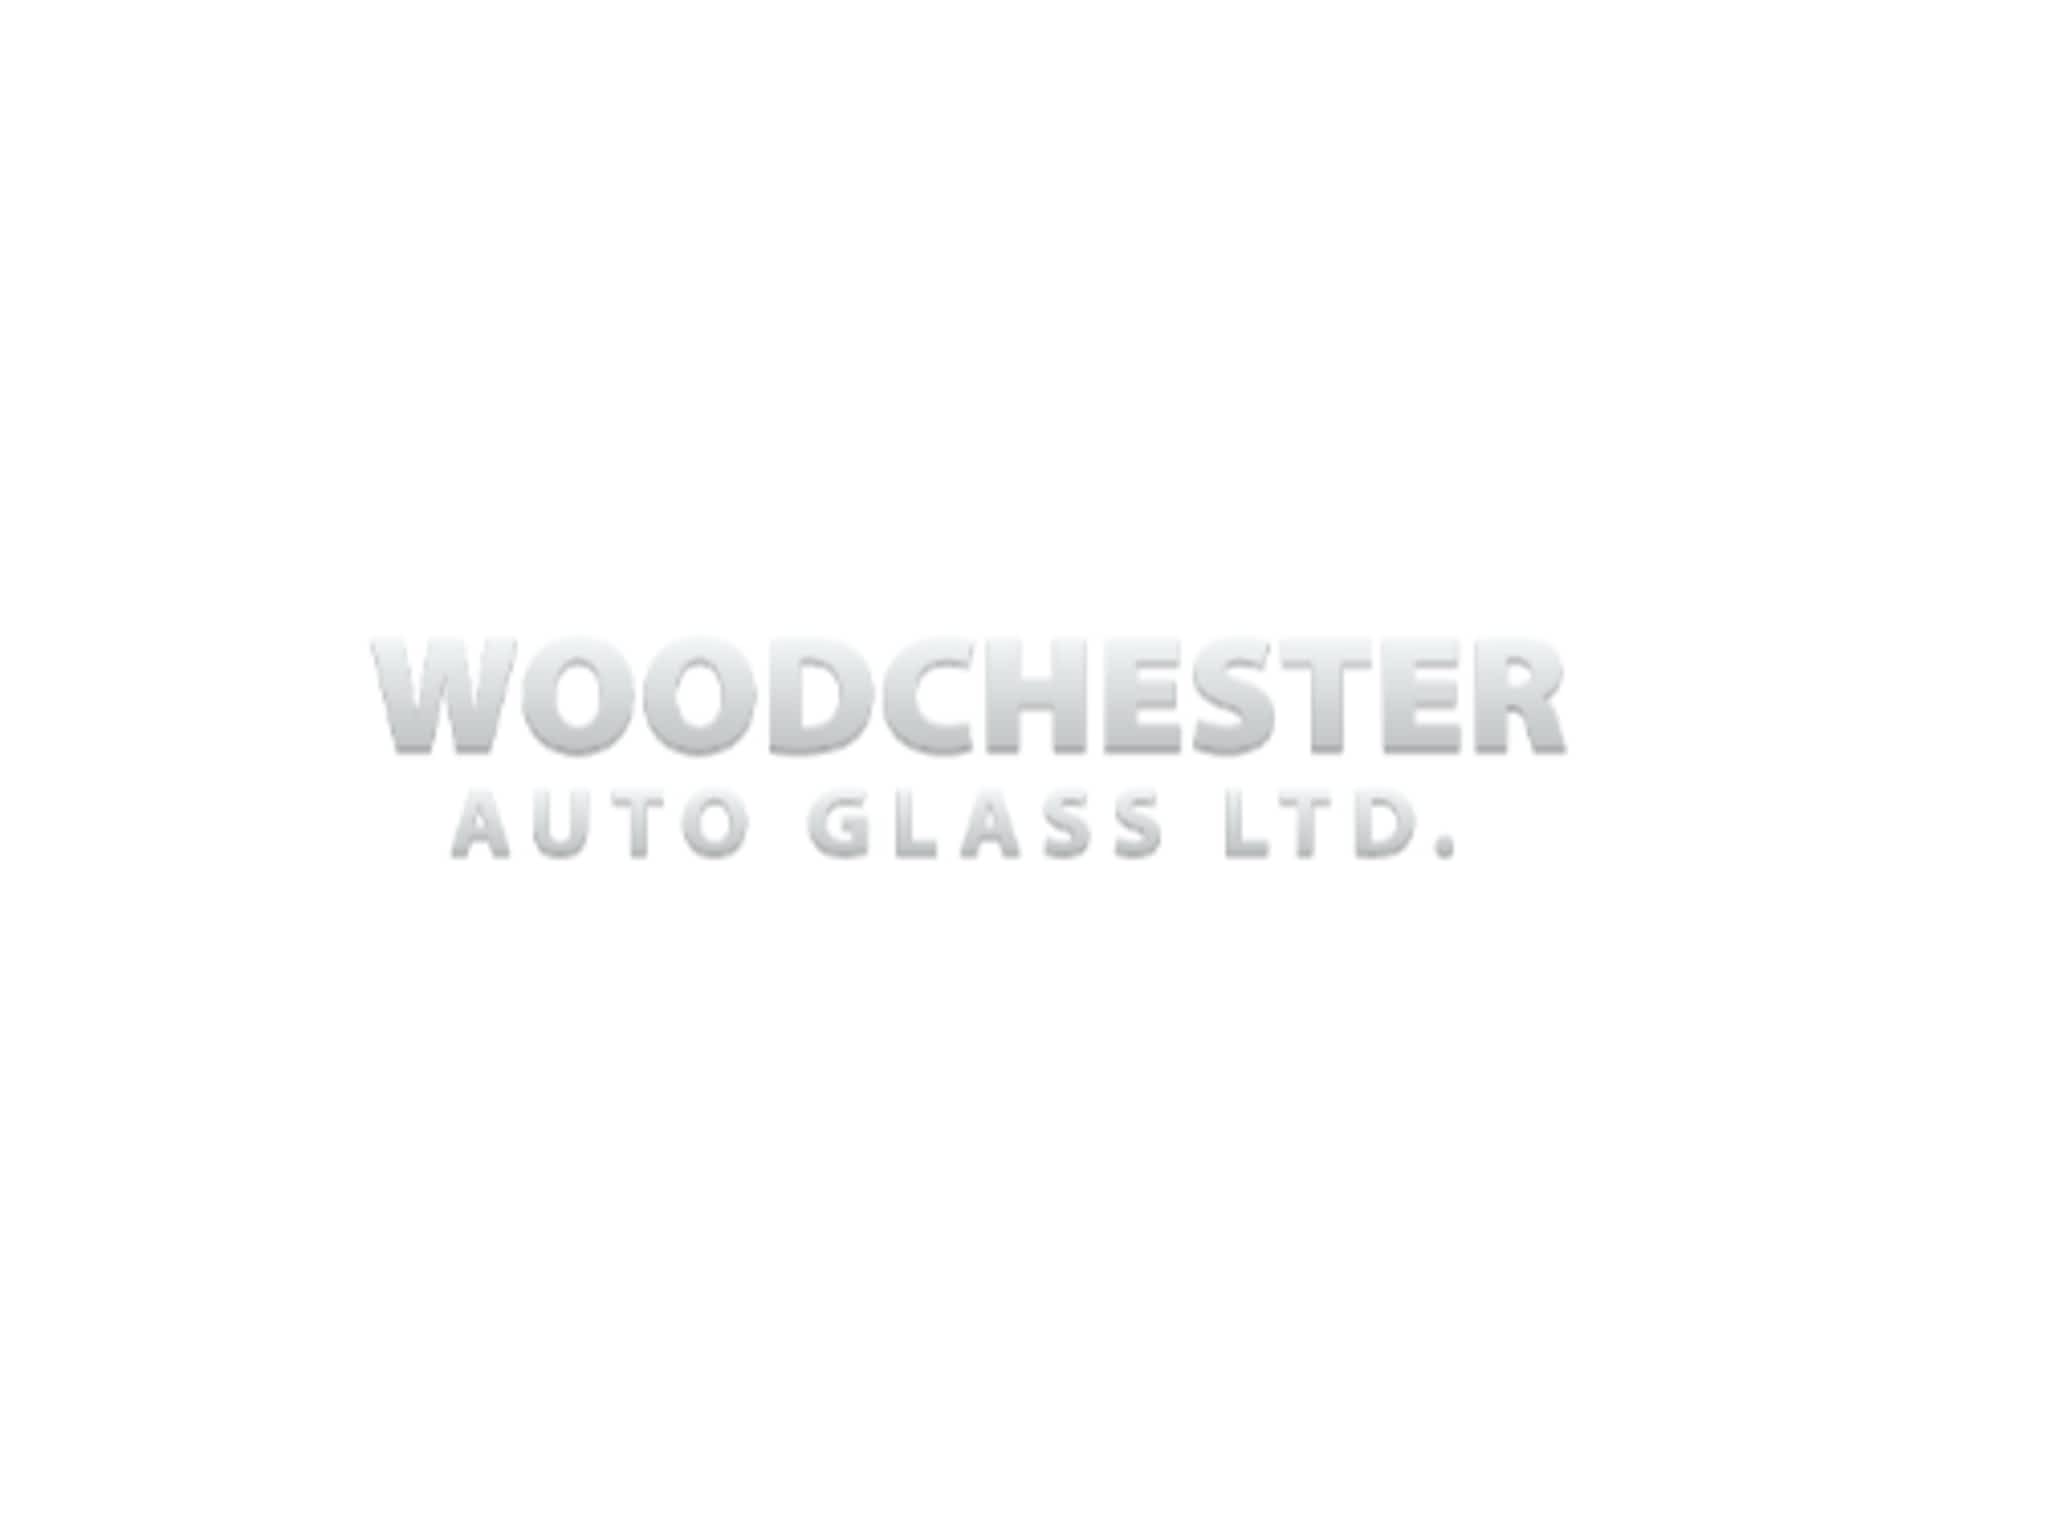 photo Woodchester Auto Glass LTD